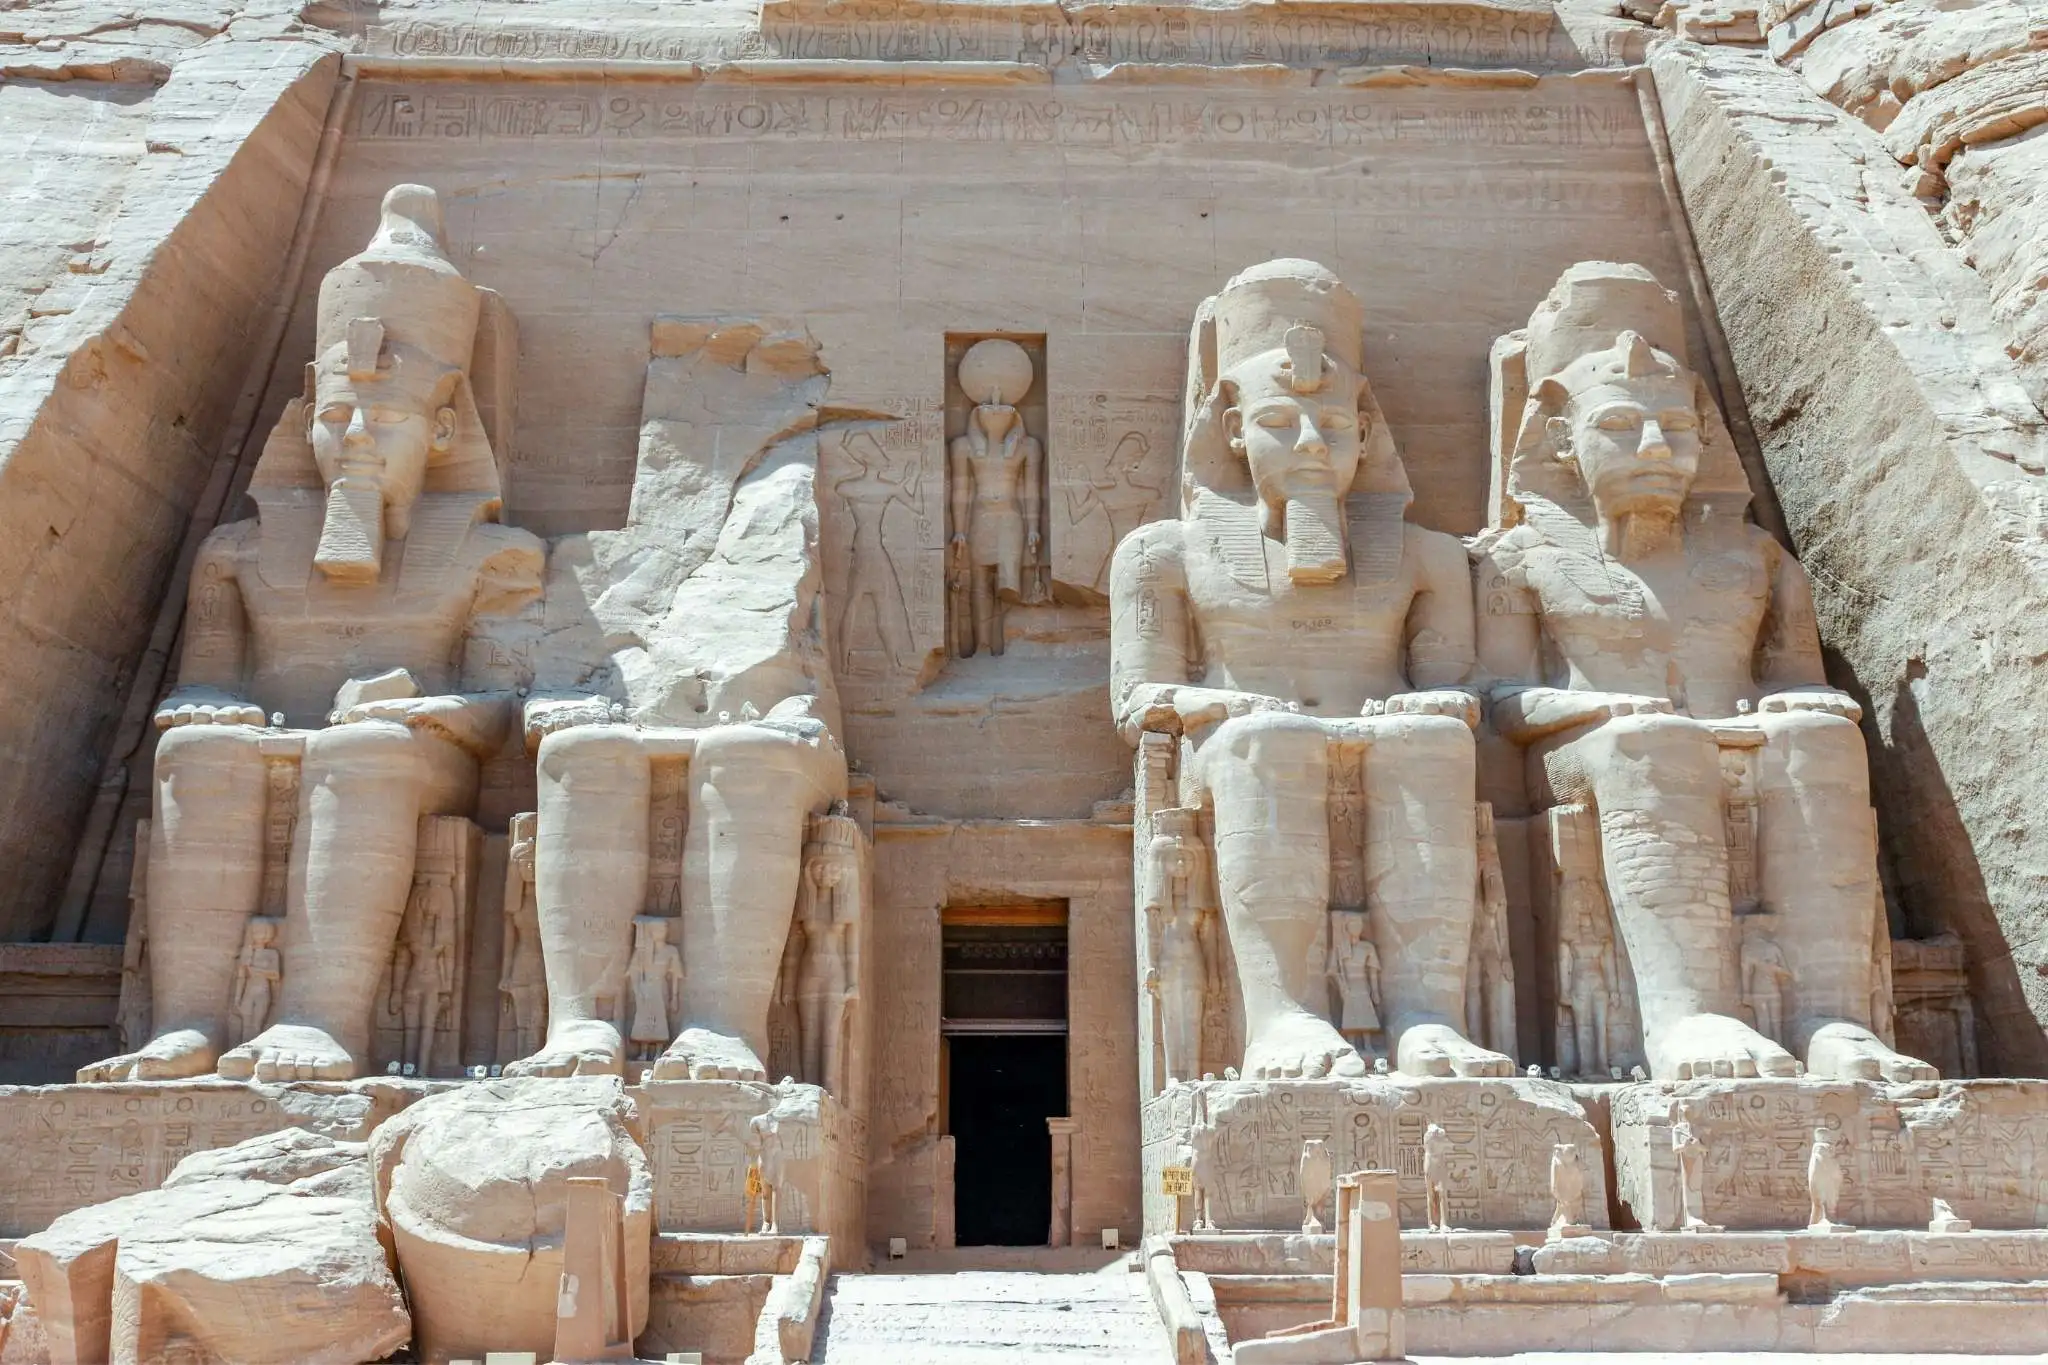 Ancient Pharaoh di Mesir sebagai Bukti Perkembangan Peradaban Pada Zamannya